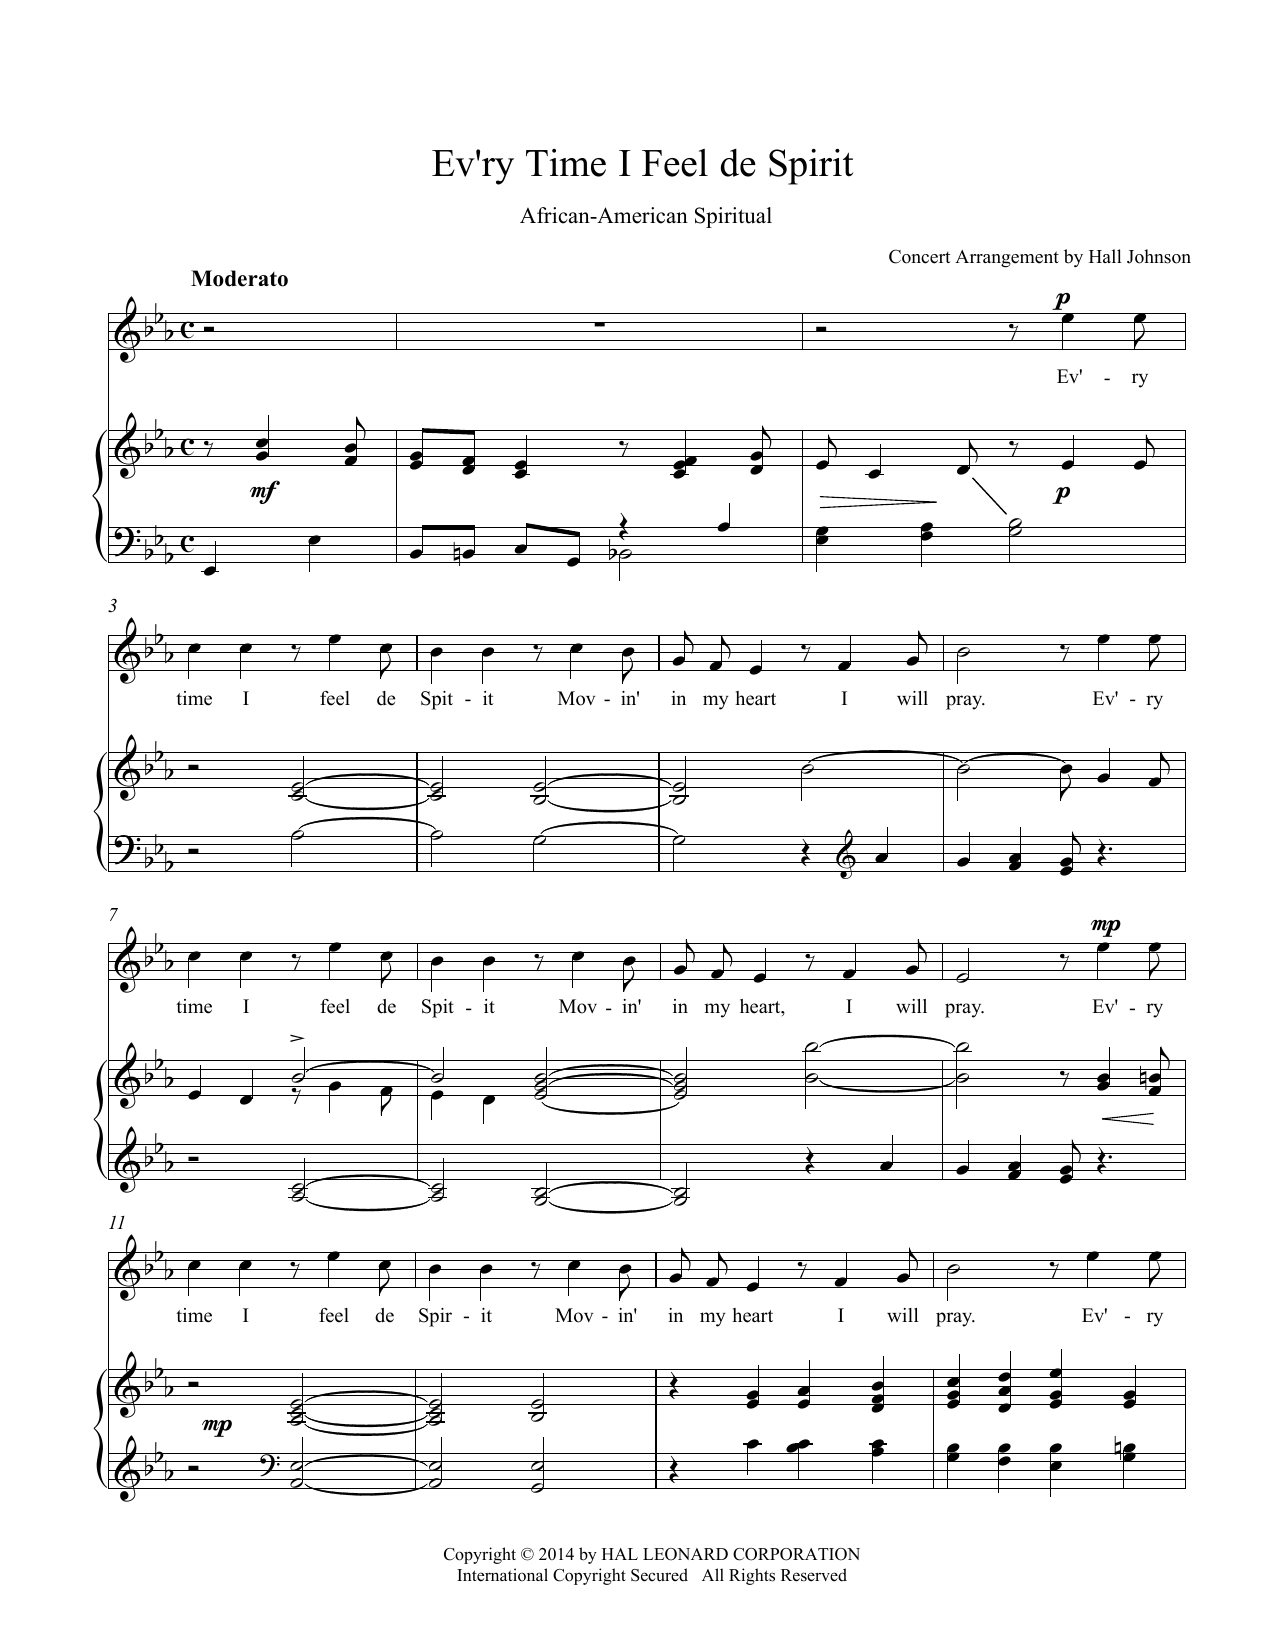 Hall Johnson Ev'ry Time I Feel de Spirit (E-flat) Sheet Music Notes & Chords for Piano & Vocal - Download or Print PDF